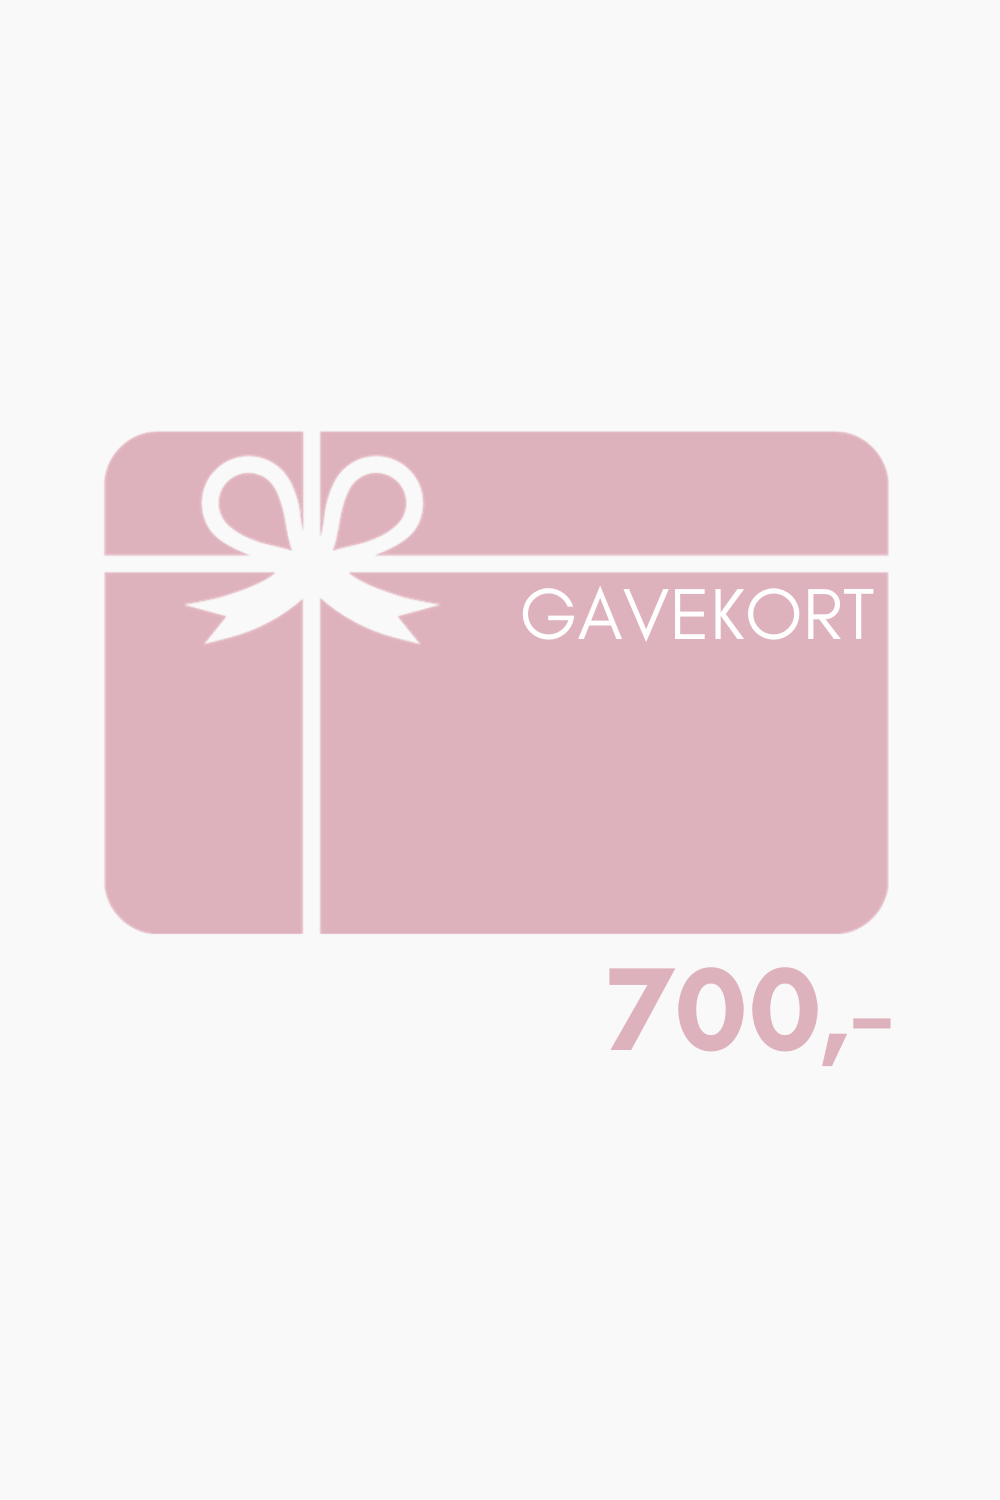 QNTS Gavekort 700 kr